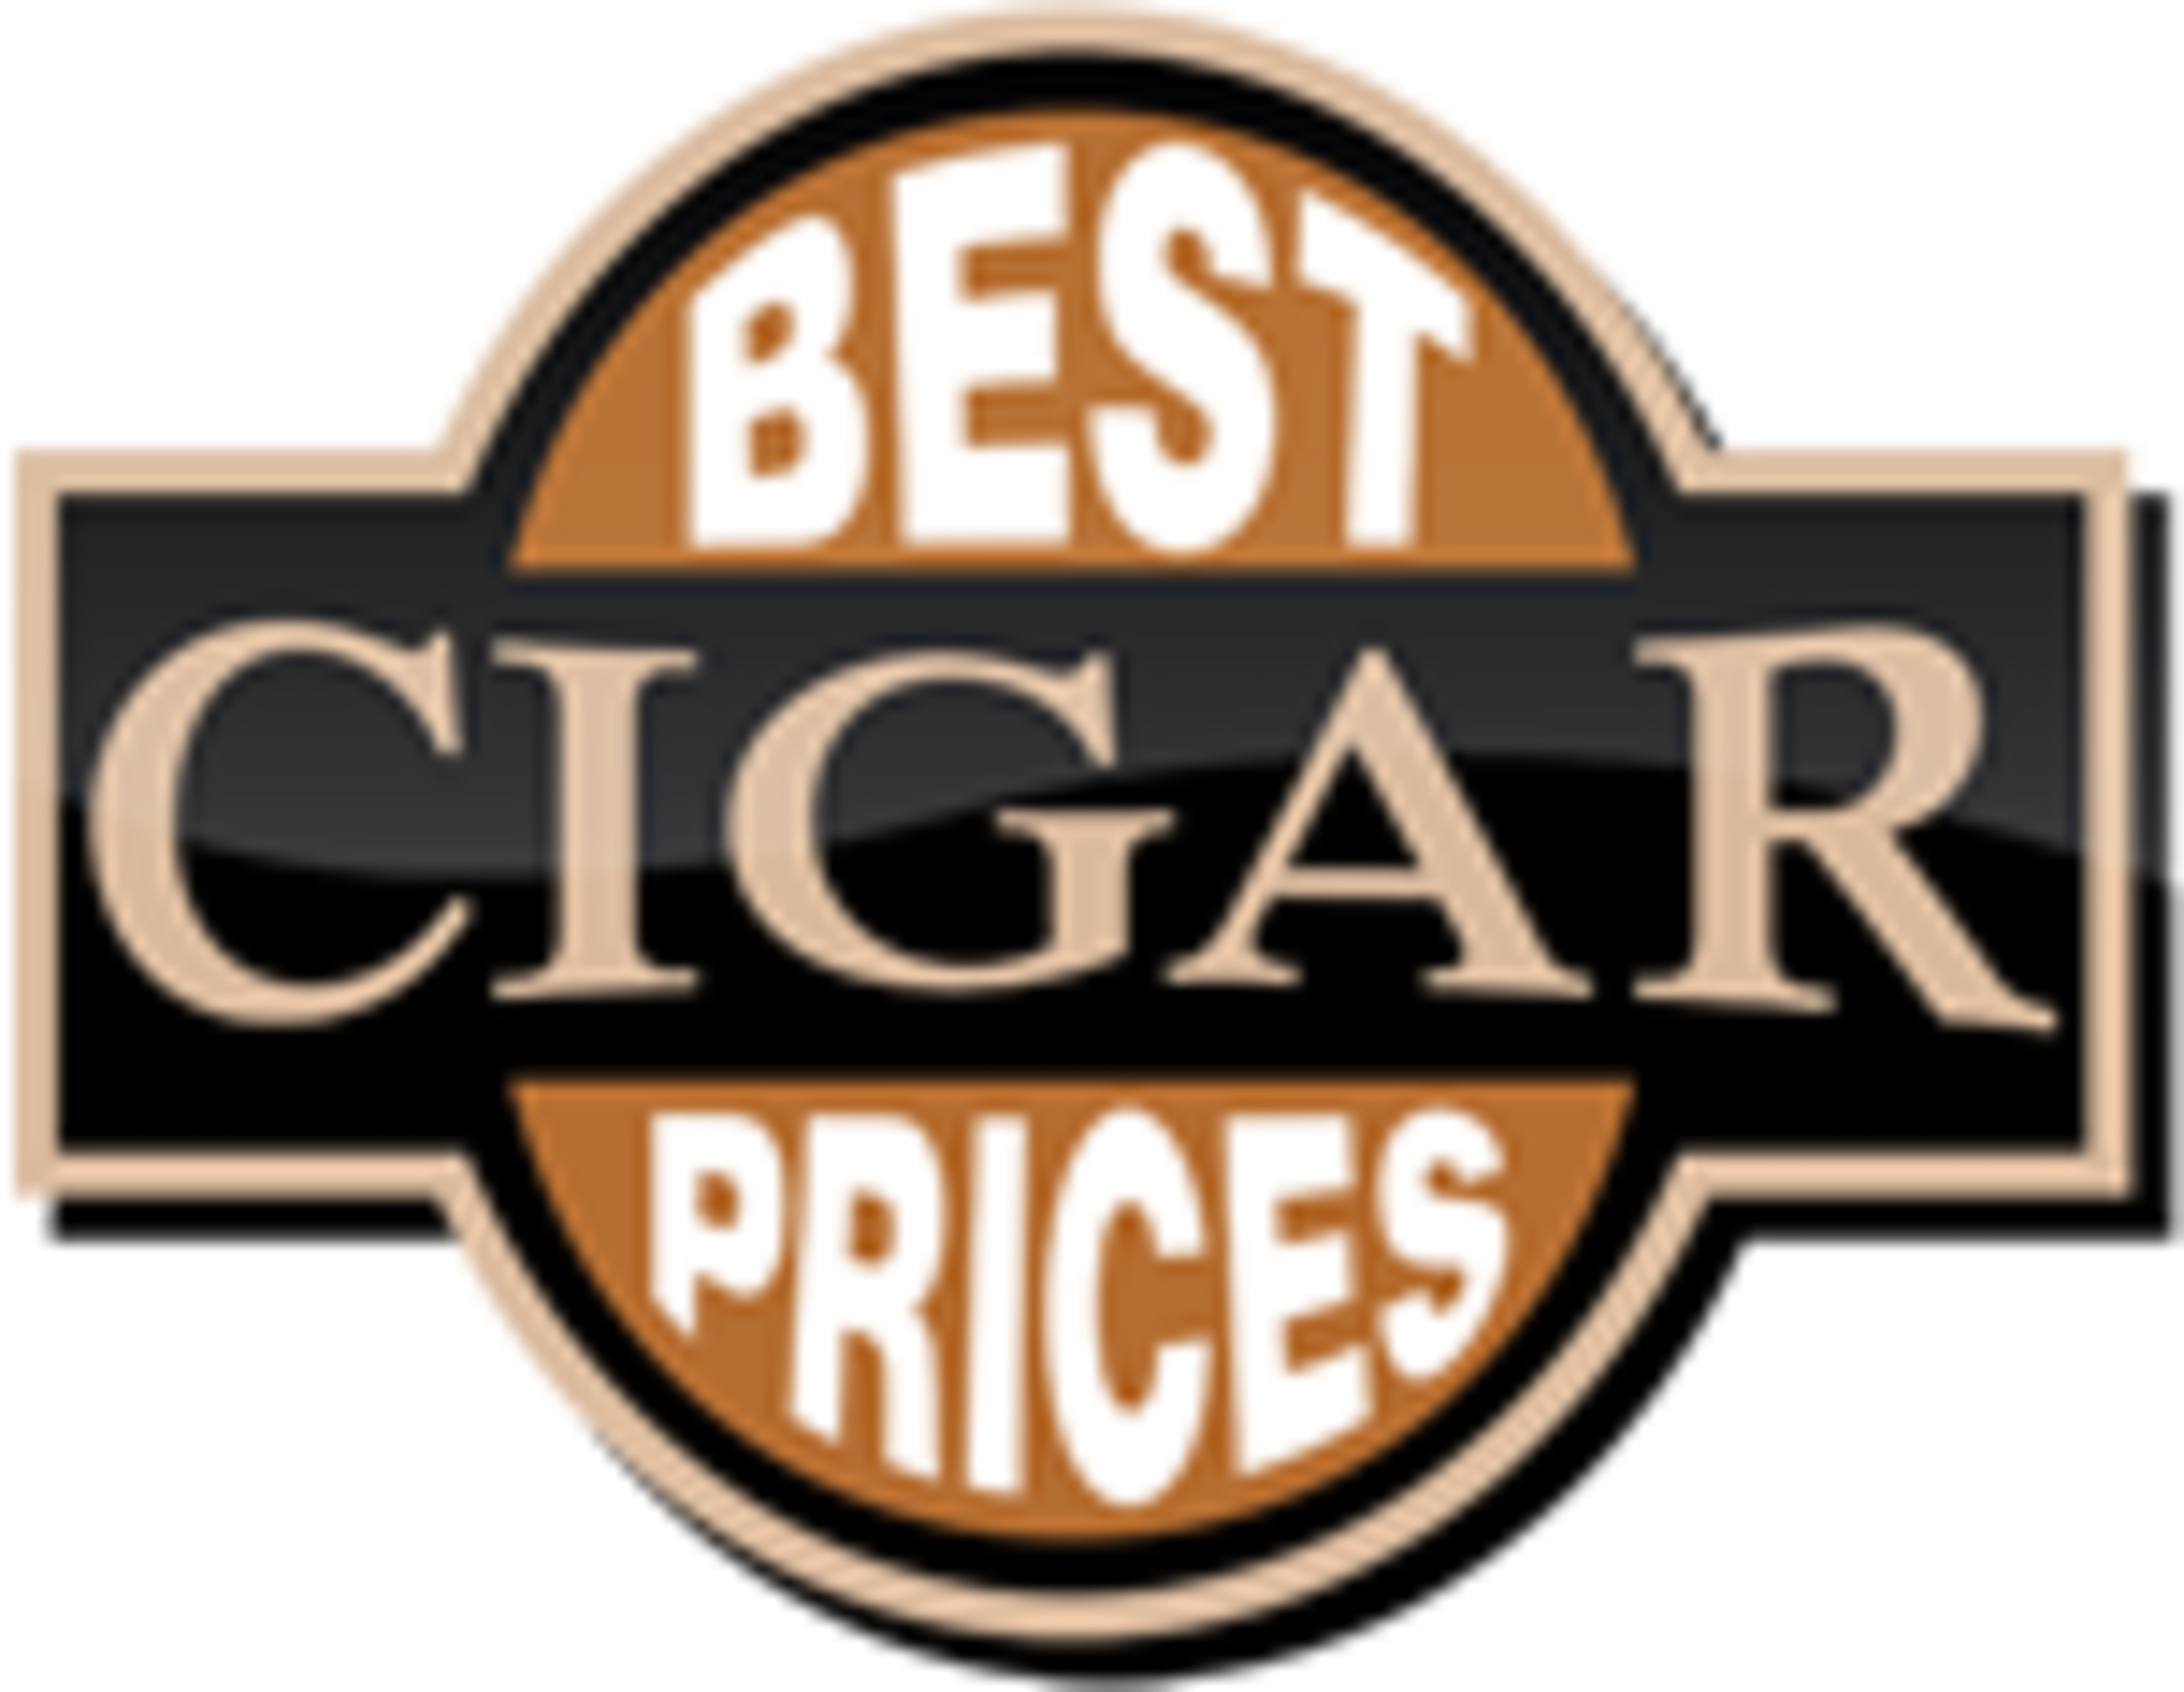 Best Cigar PricesCode